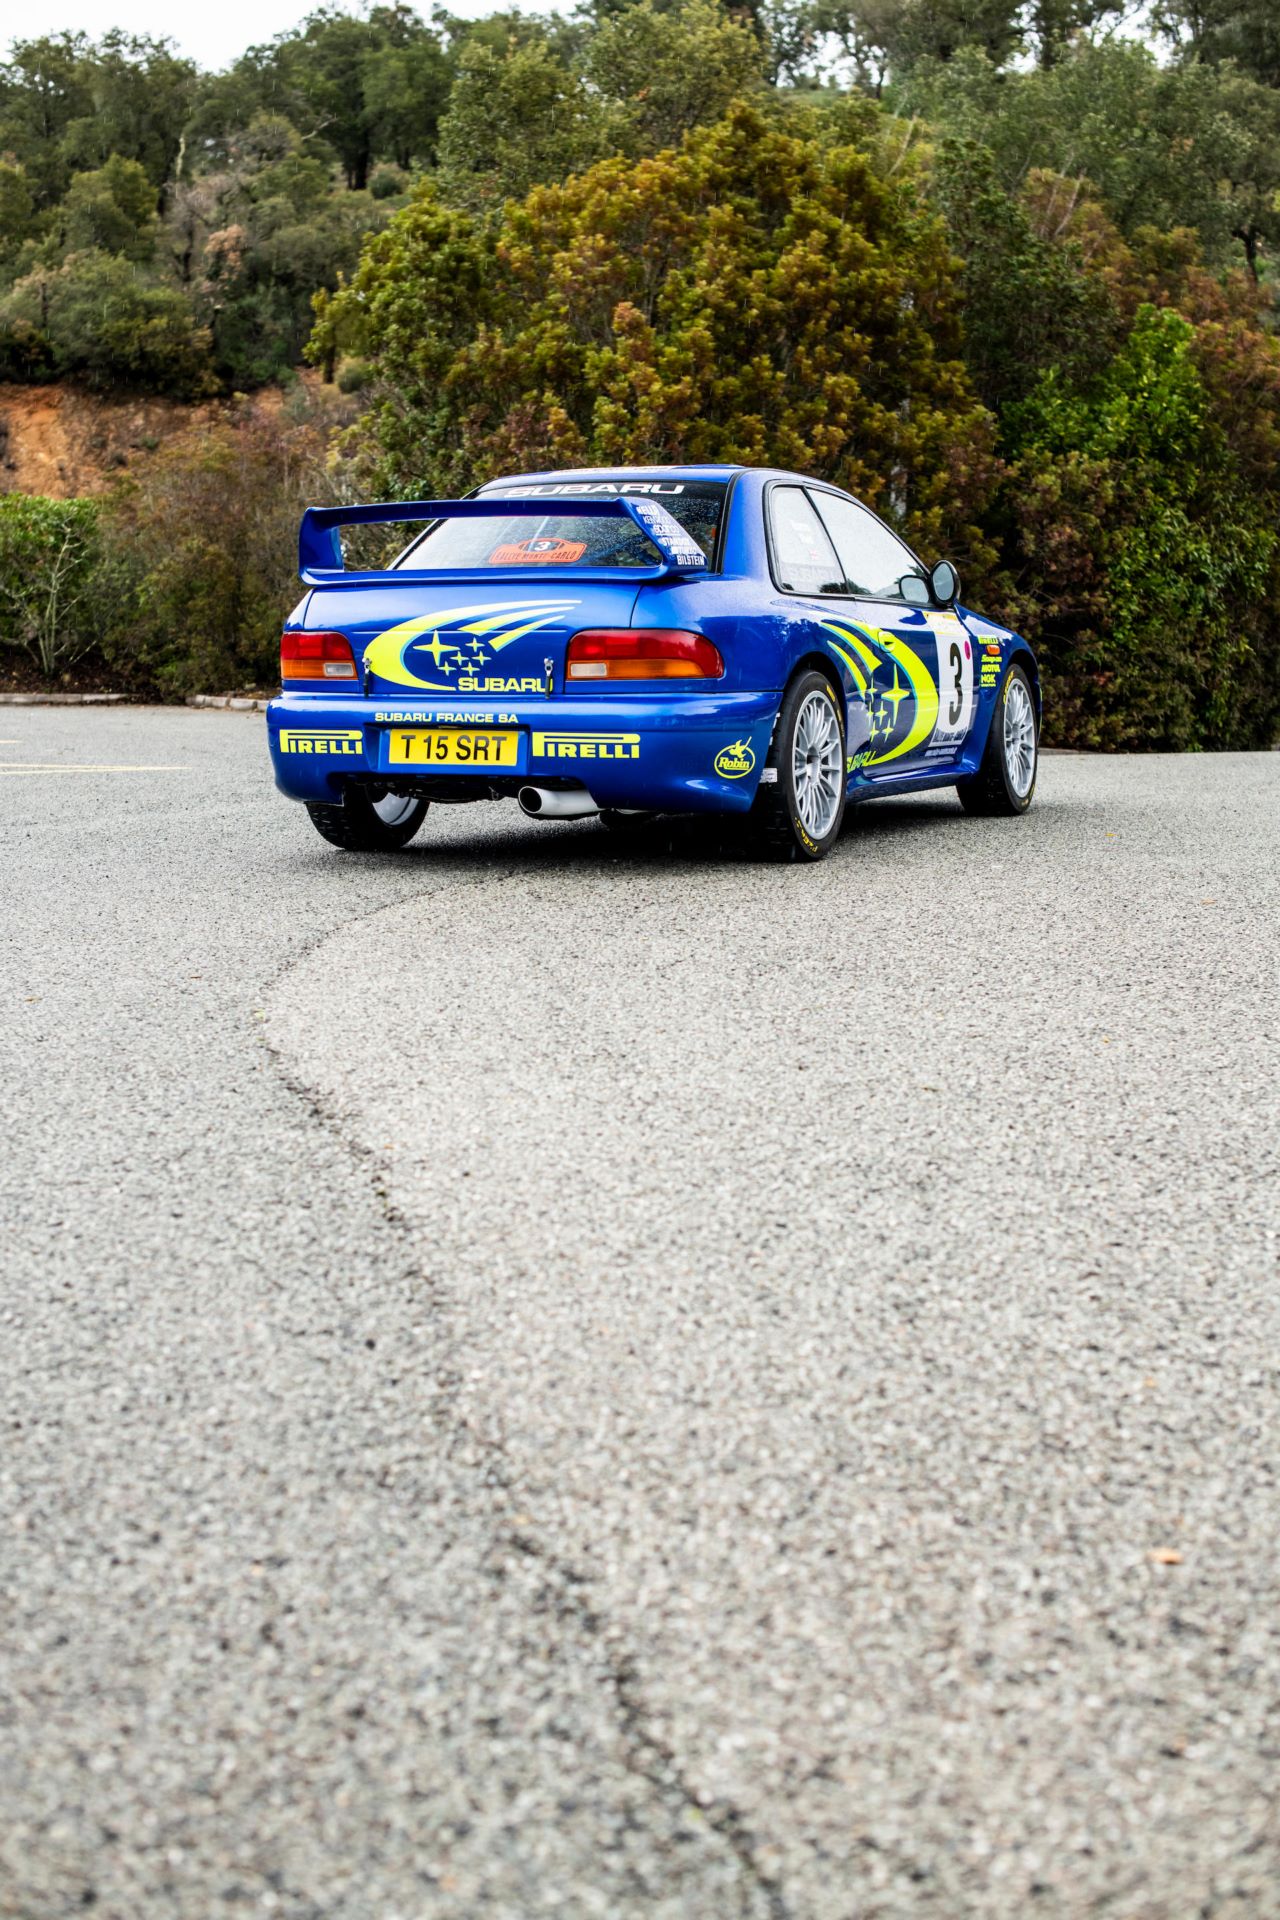 Subaru-Impreza-WRC-Richard-Burns-auction-61